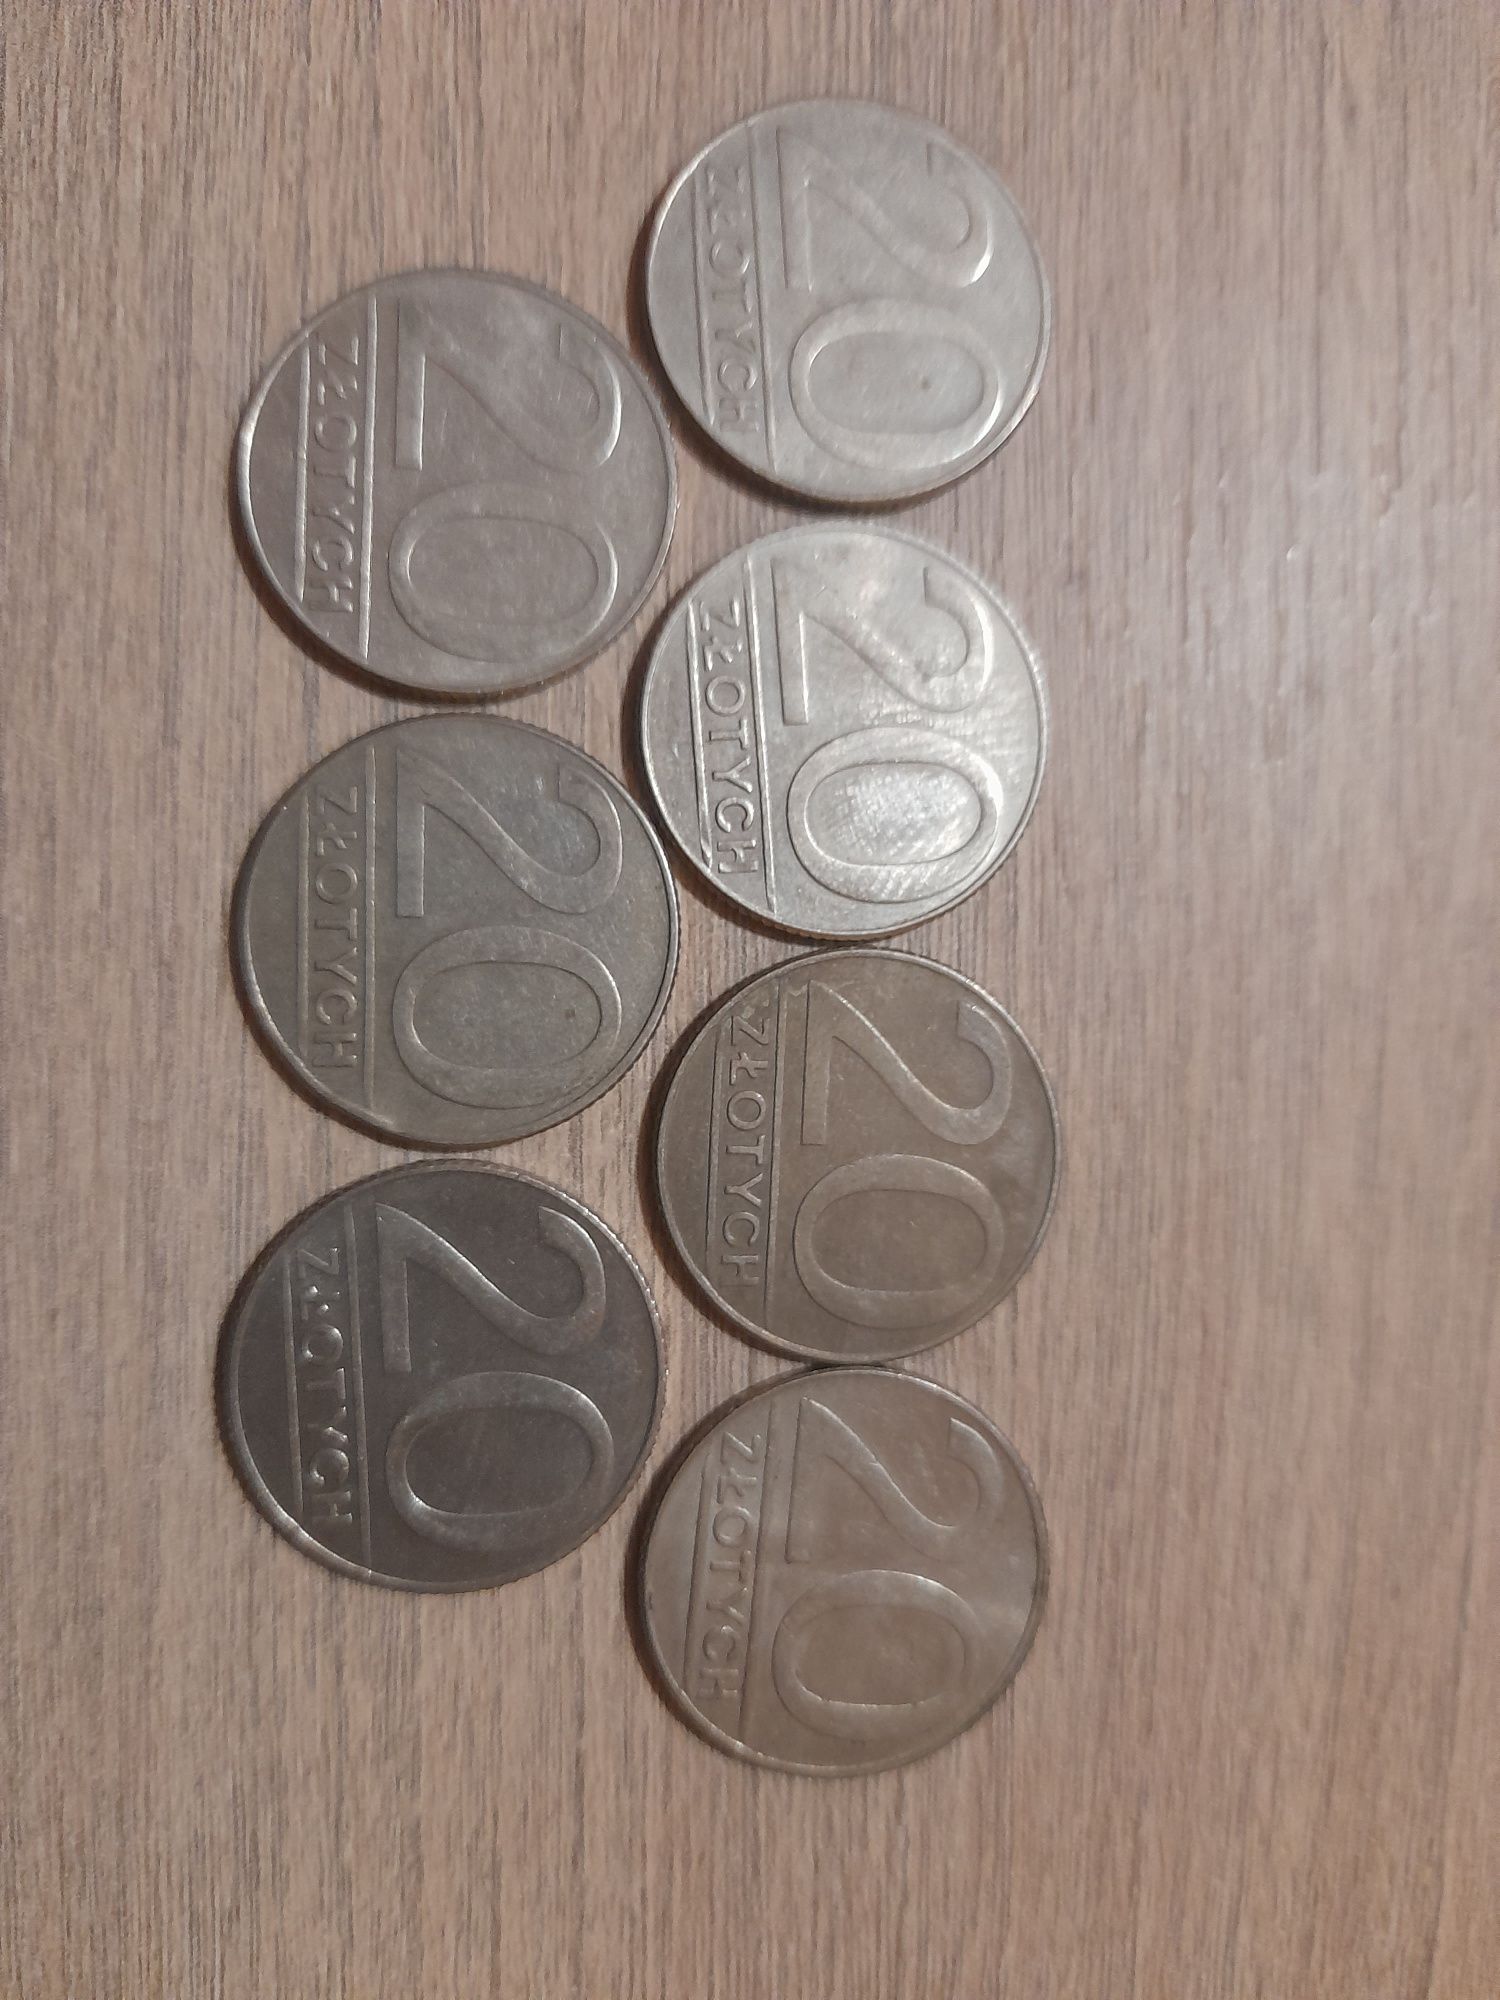 Stare monety z PRL